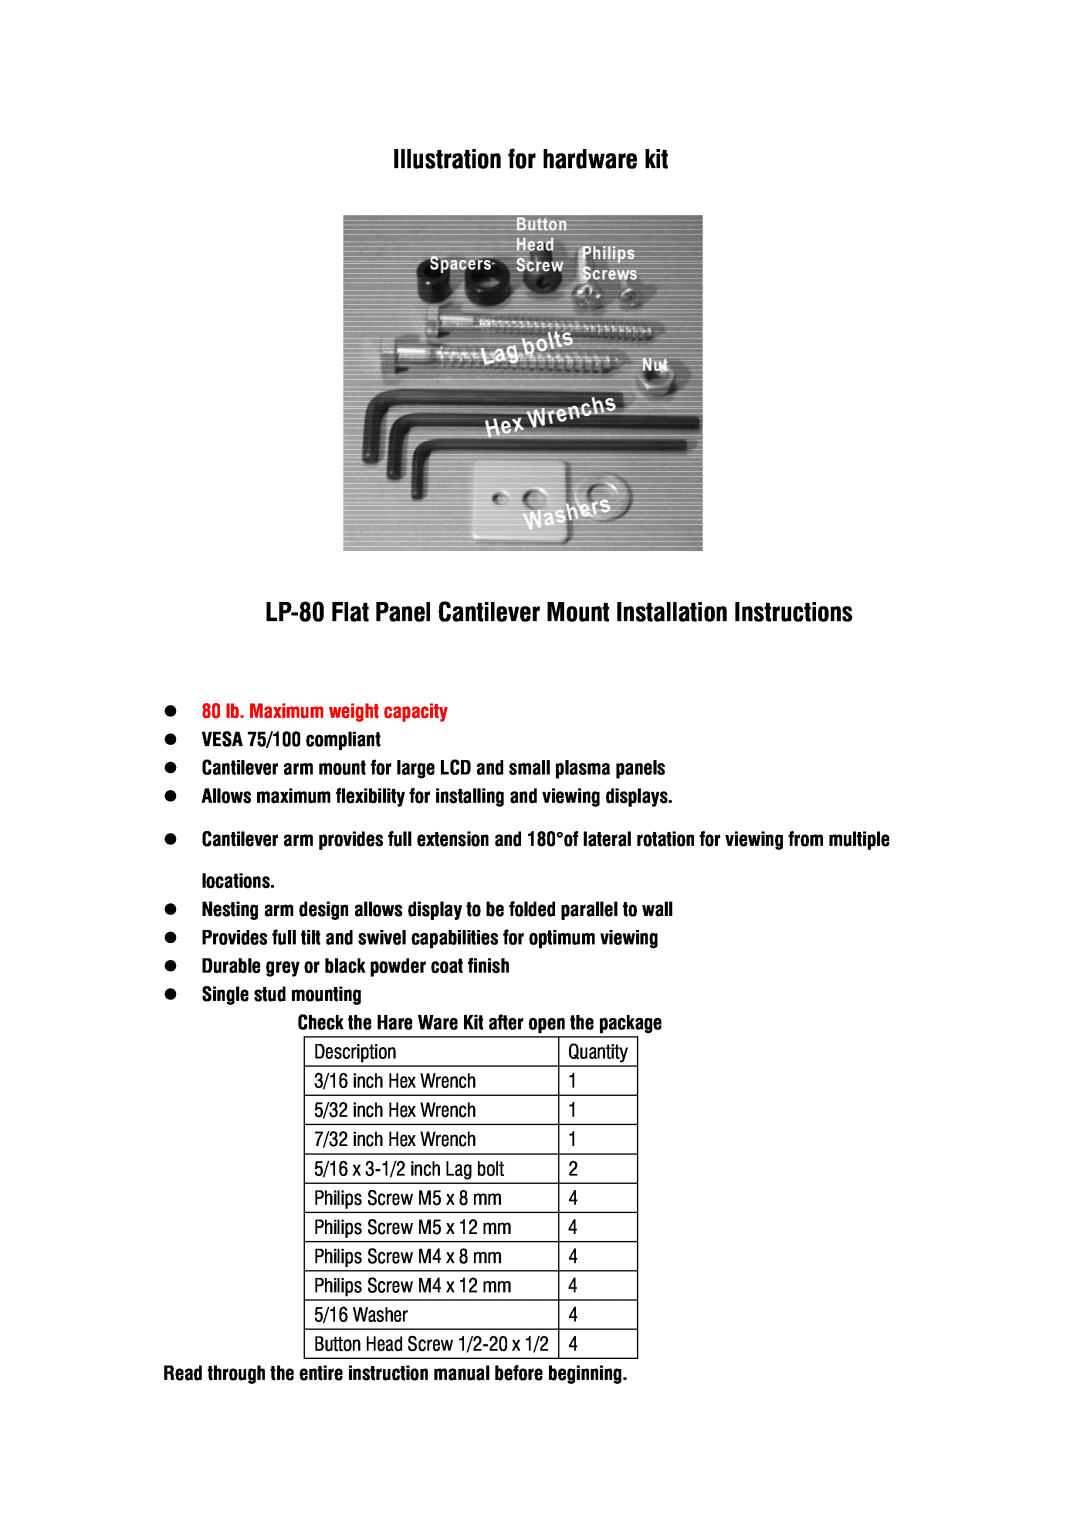 DCS Flat Panel TV warranty Illustration for hardware kit, LP-80 Flat Panel Cantilever Mount Installation Instructions 